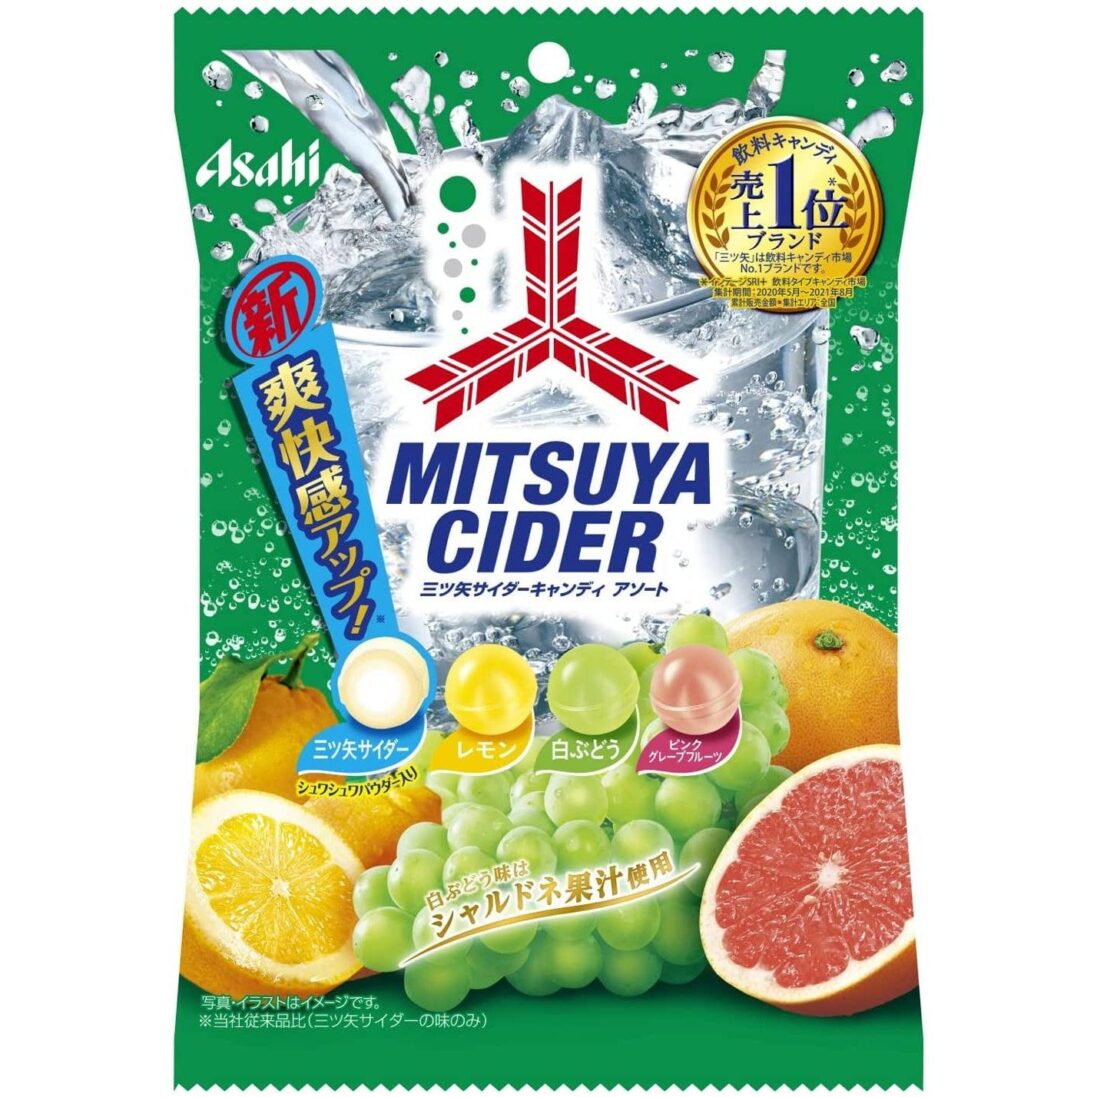 Asahi Mitsuya Cider Assorted Fruits Candy 112g